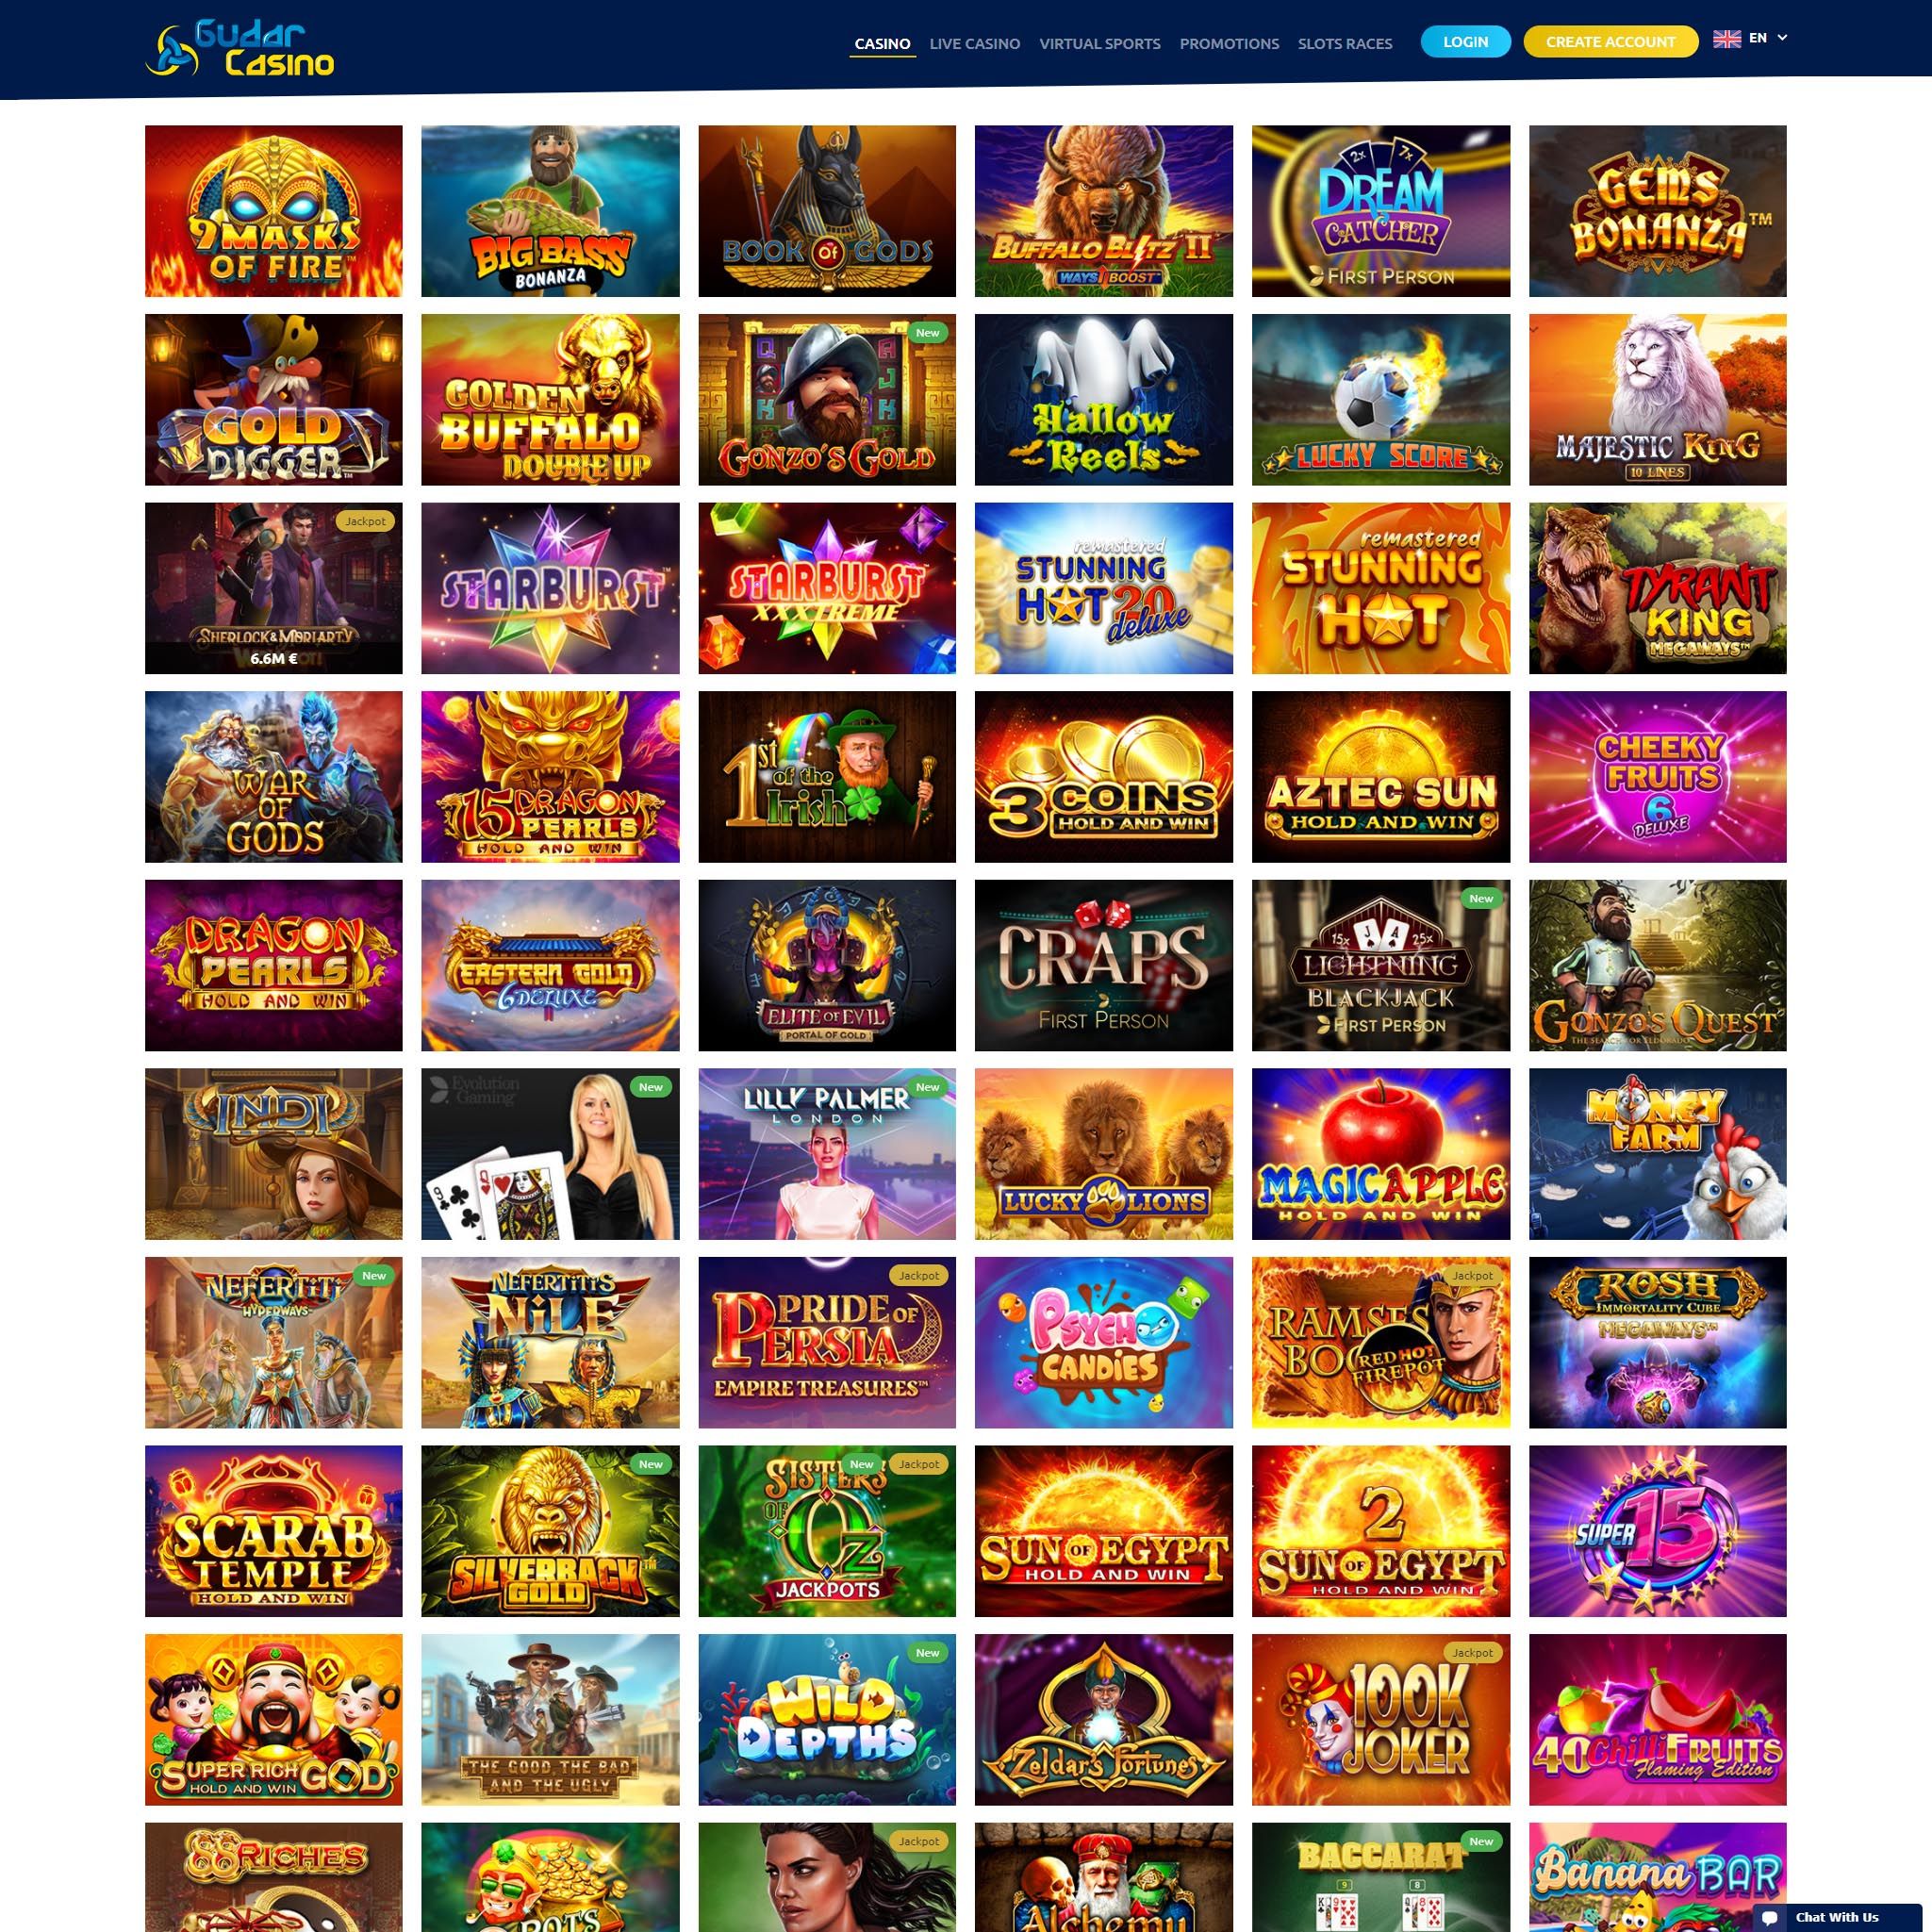 Gudar Casino full games catalogue